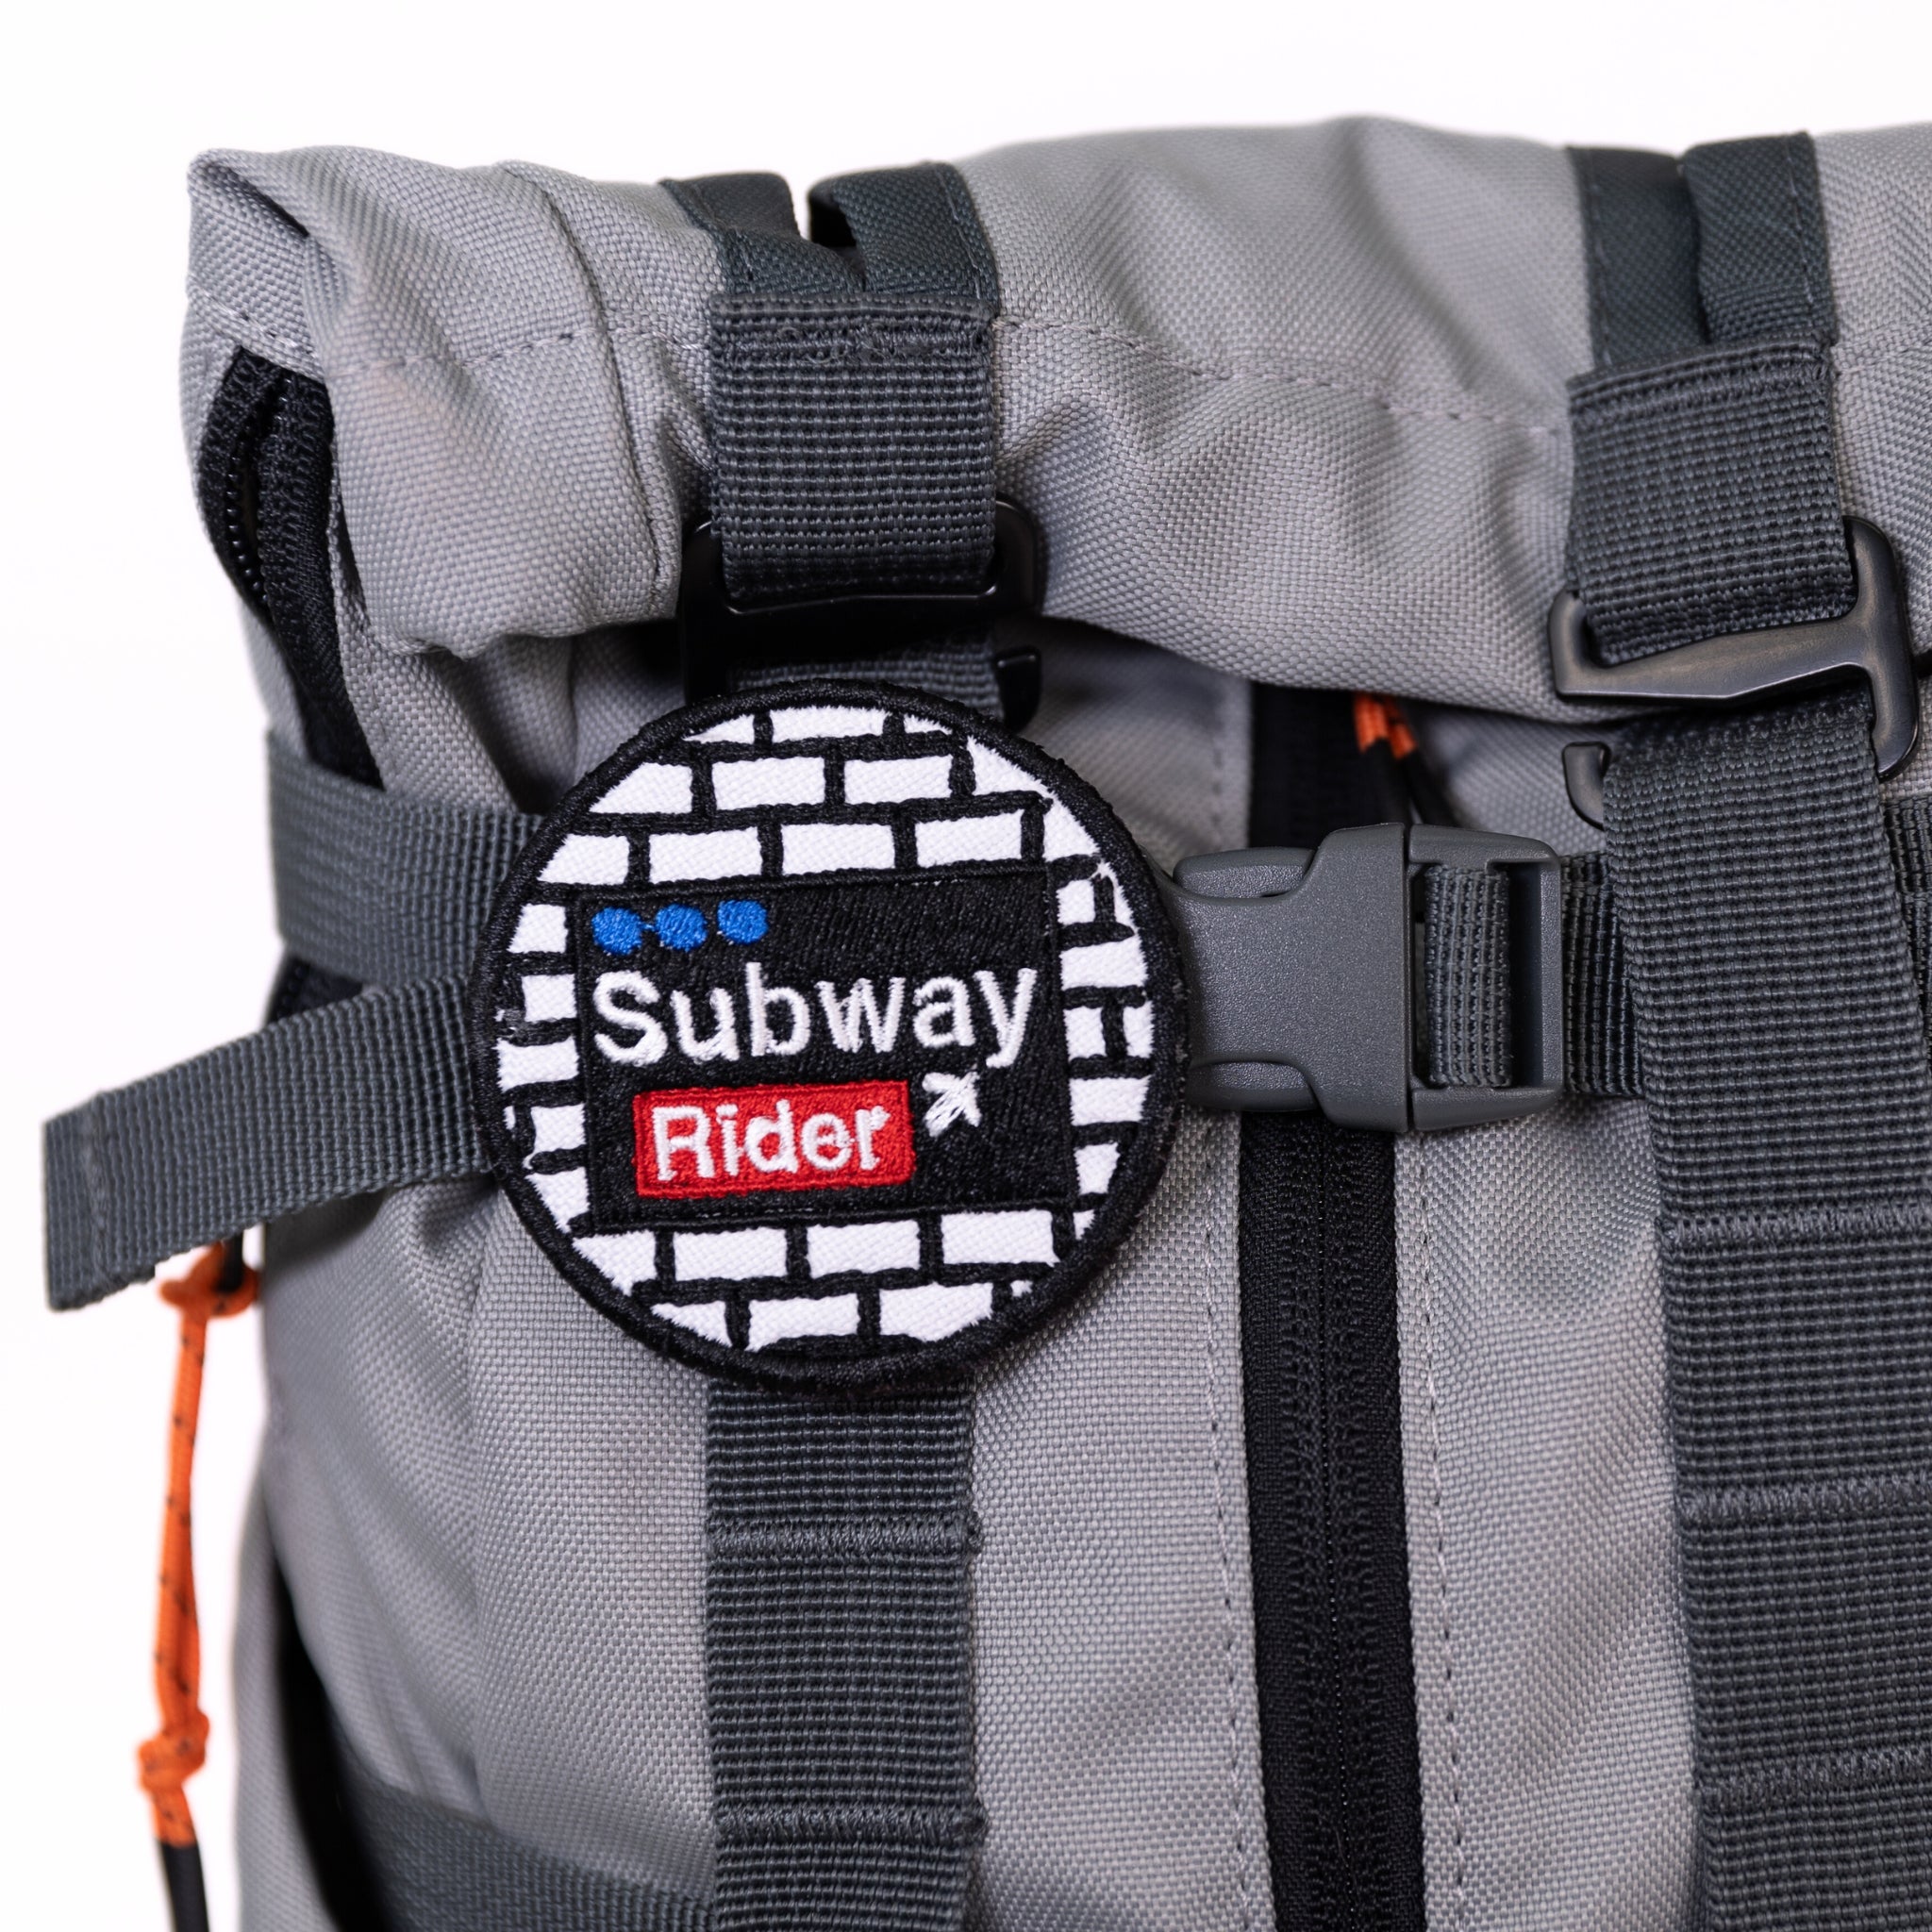 Subway Rider Circle Patch